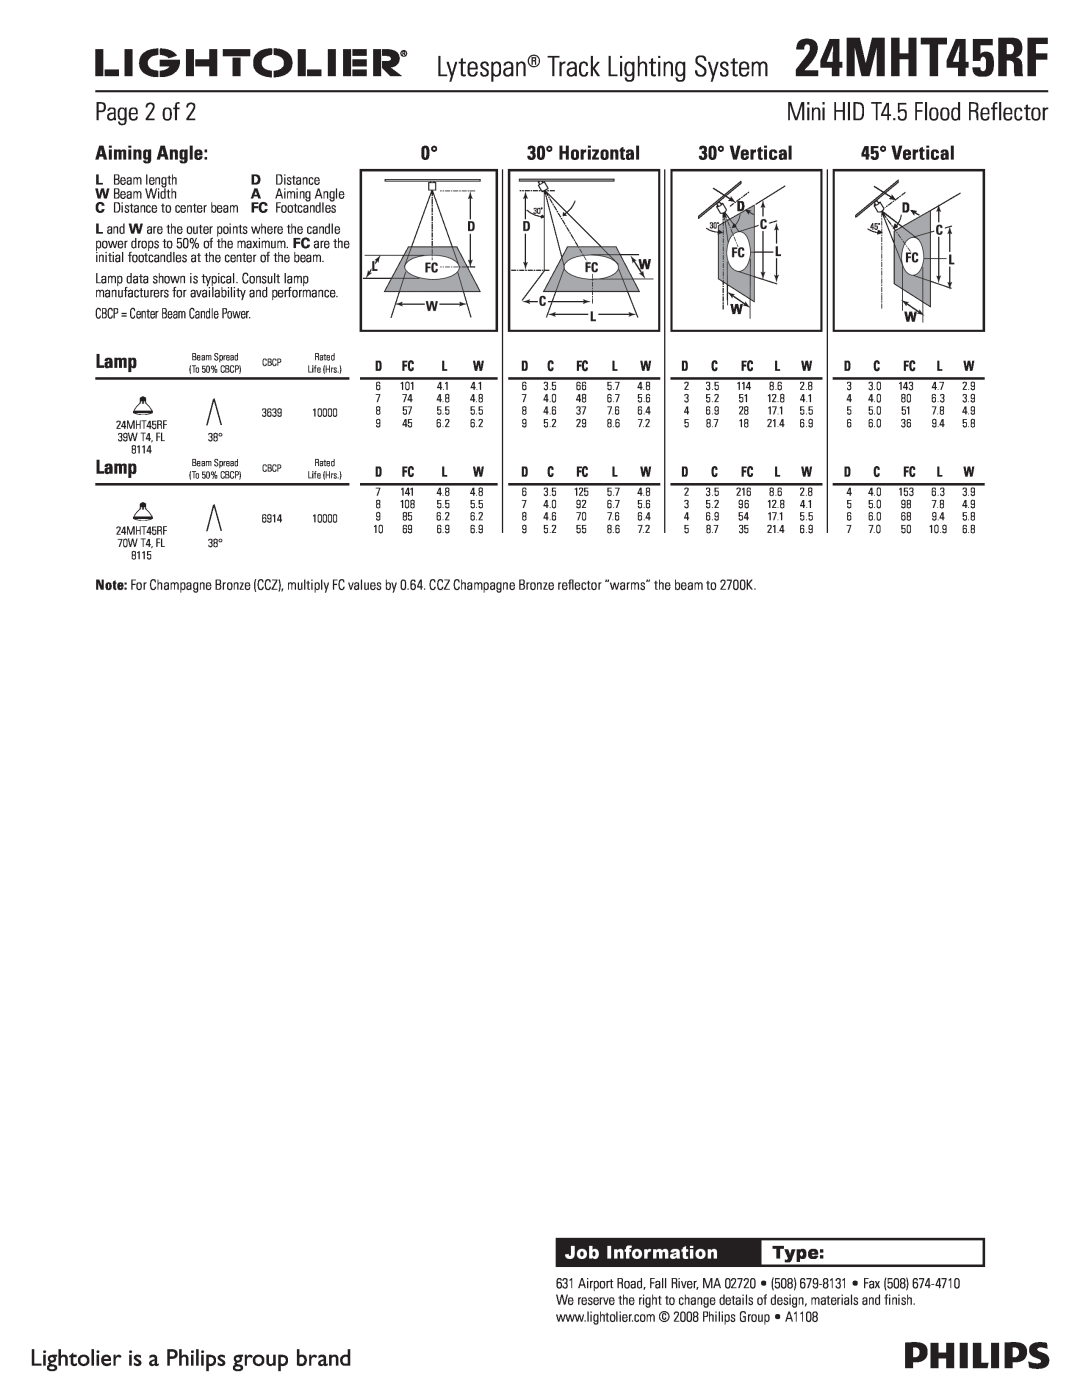 Lightolier 24MHT45RF Page 2 of, Aiming Angle, Lamp, Horizontal, Vertical, Mini HID T4.5 Flood Reflector, Job Information 